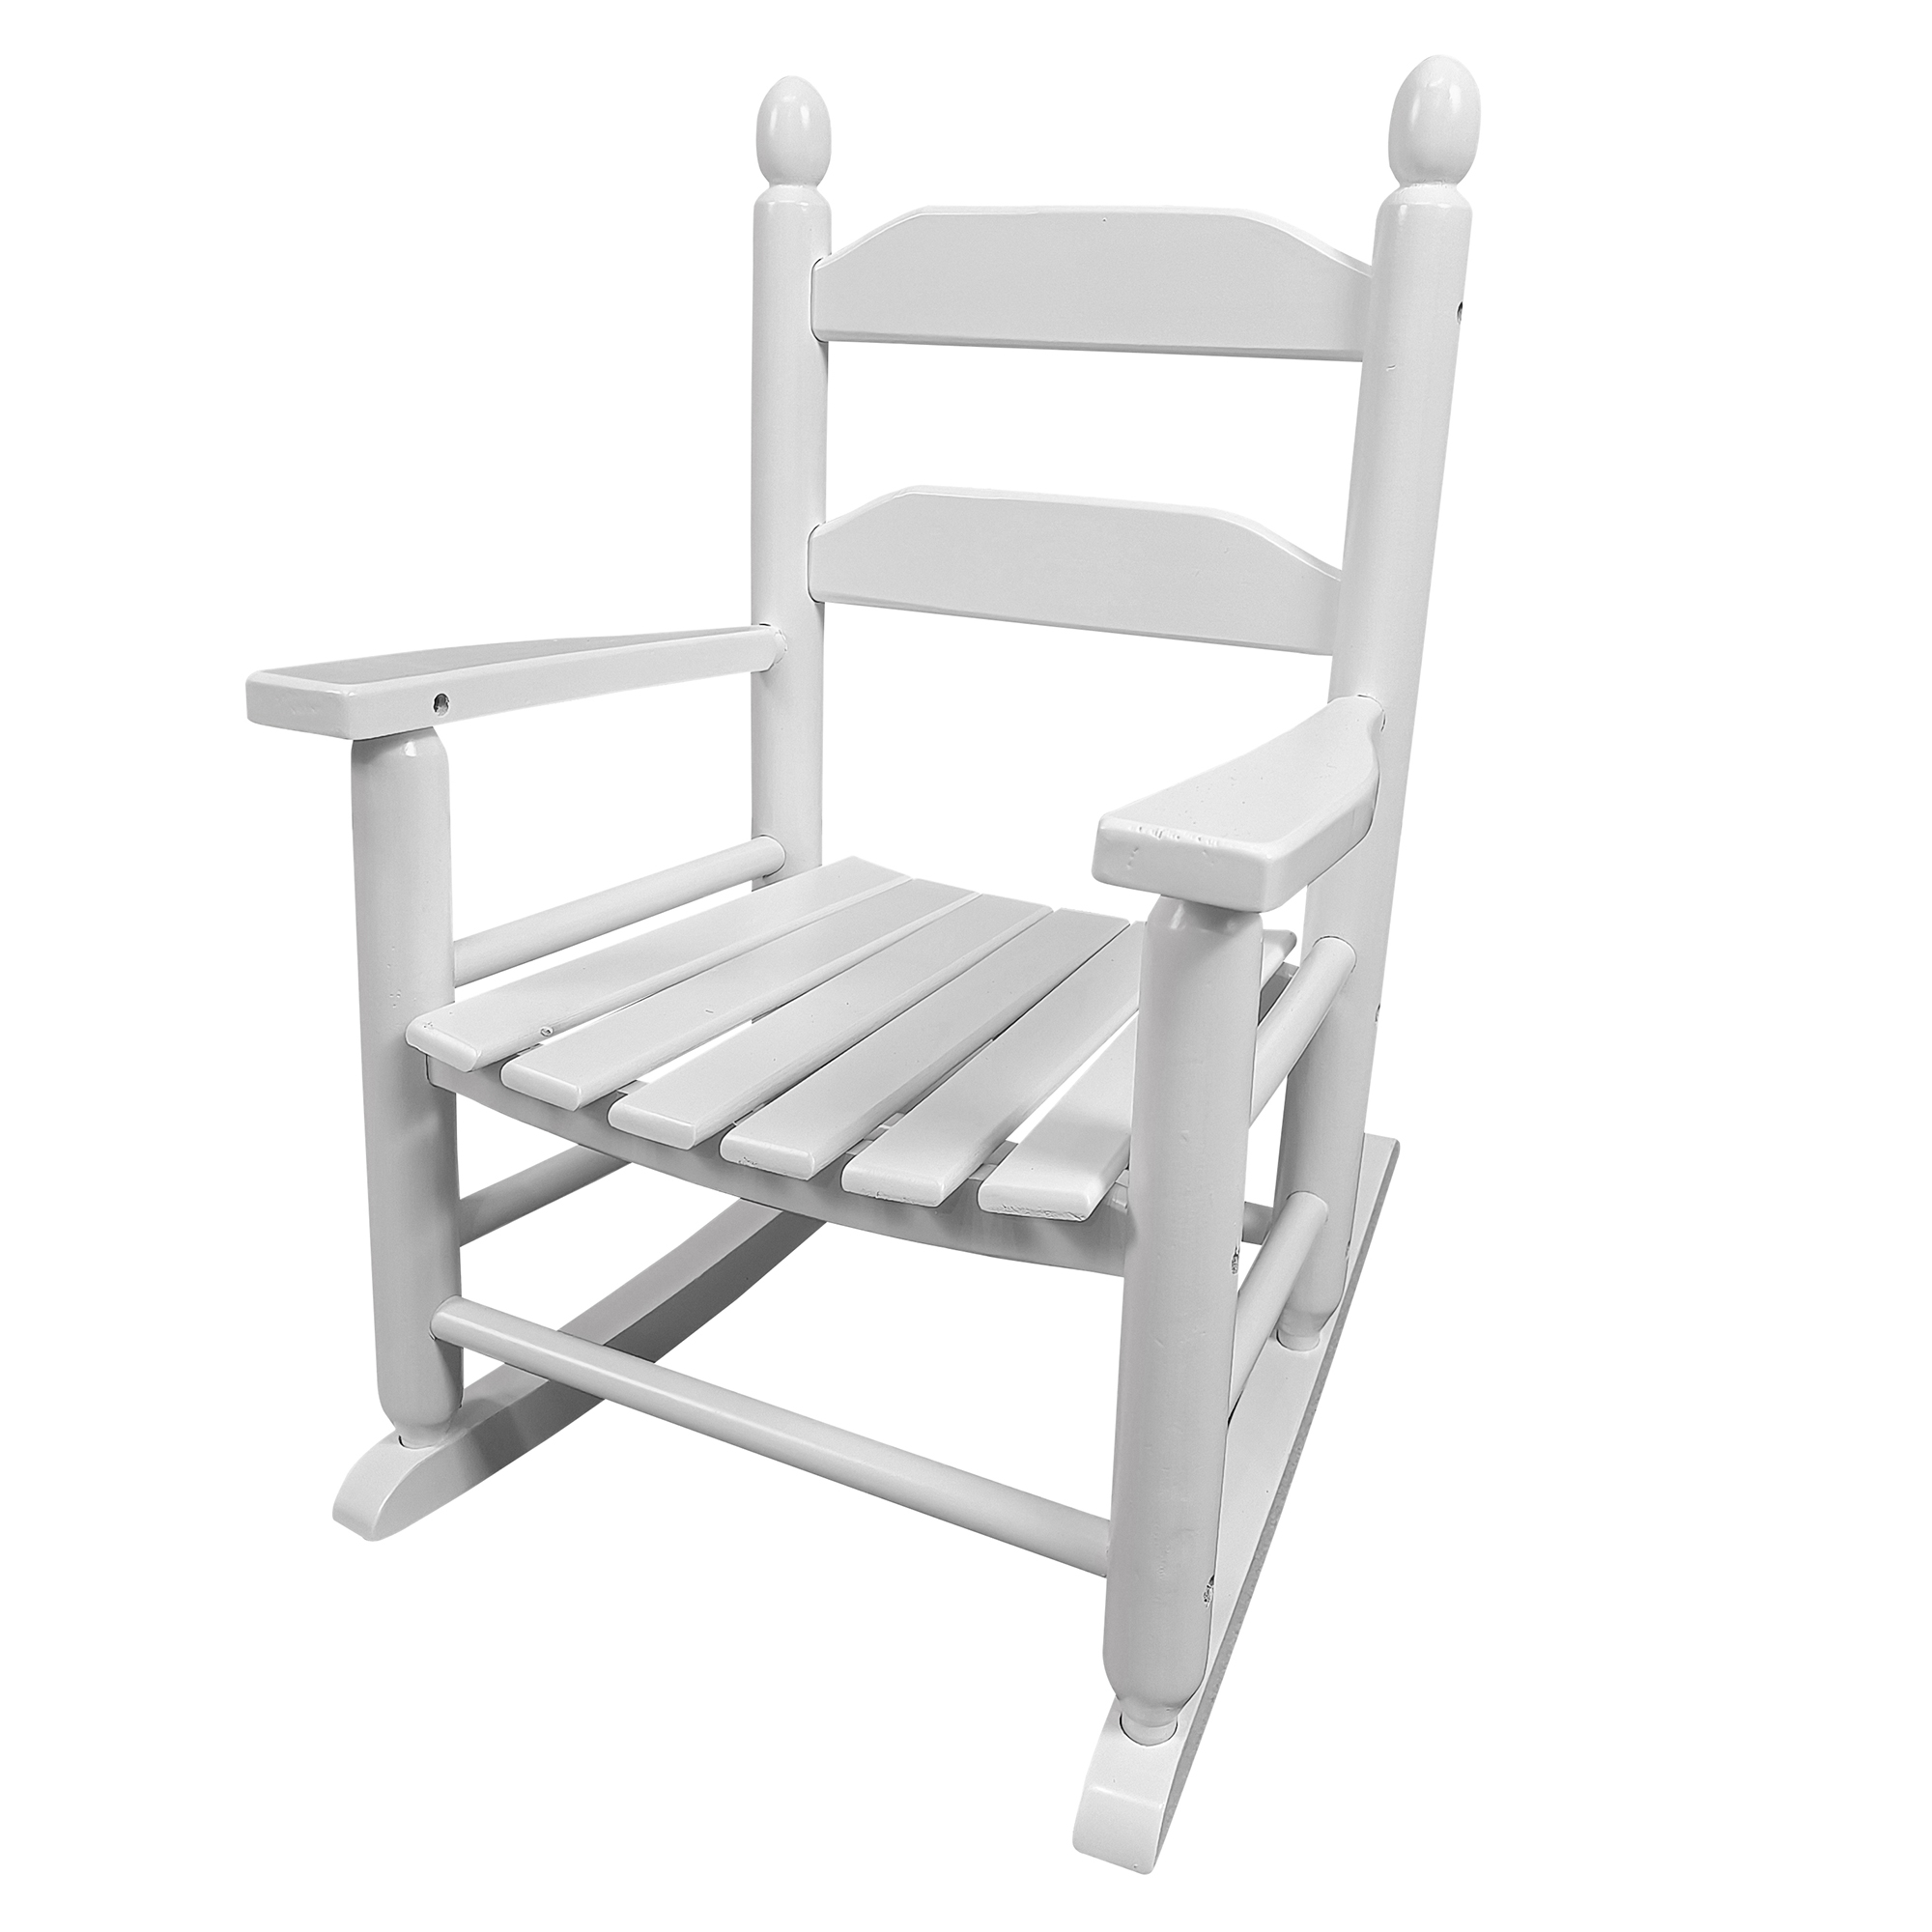 Garden Wooden Furniture Child Rocking Chair, Porch Rocking Chair with Handrail, Oak - image 2 of 7